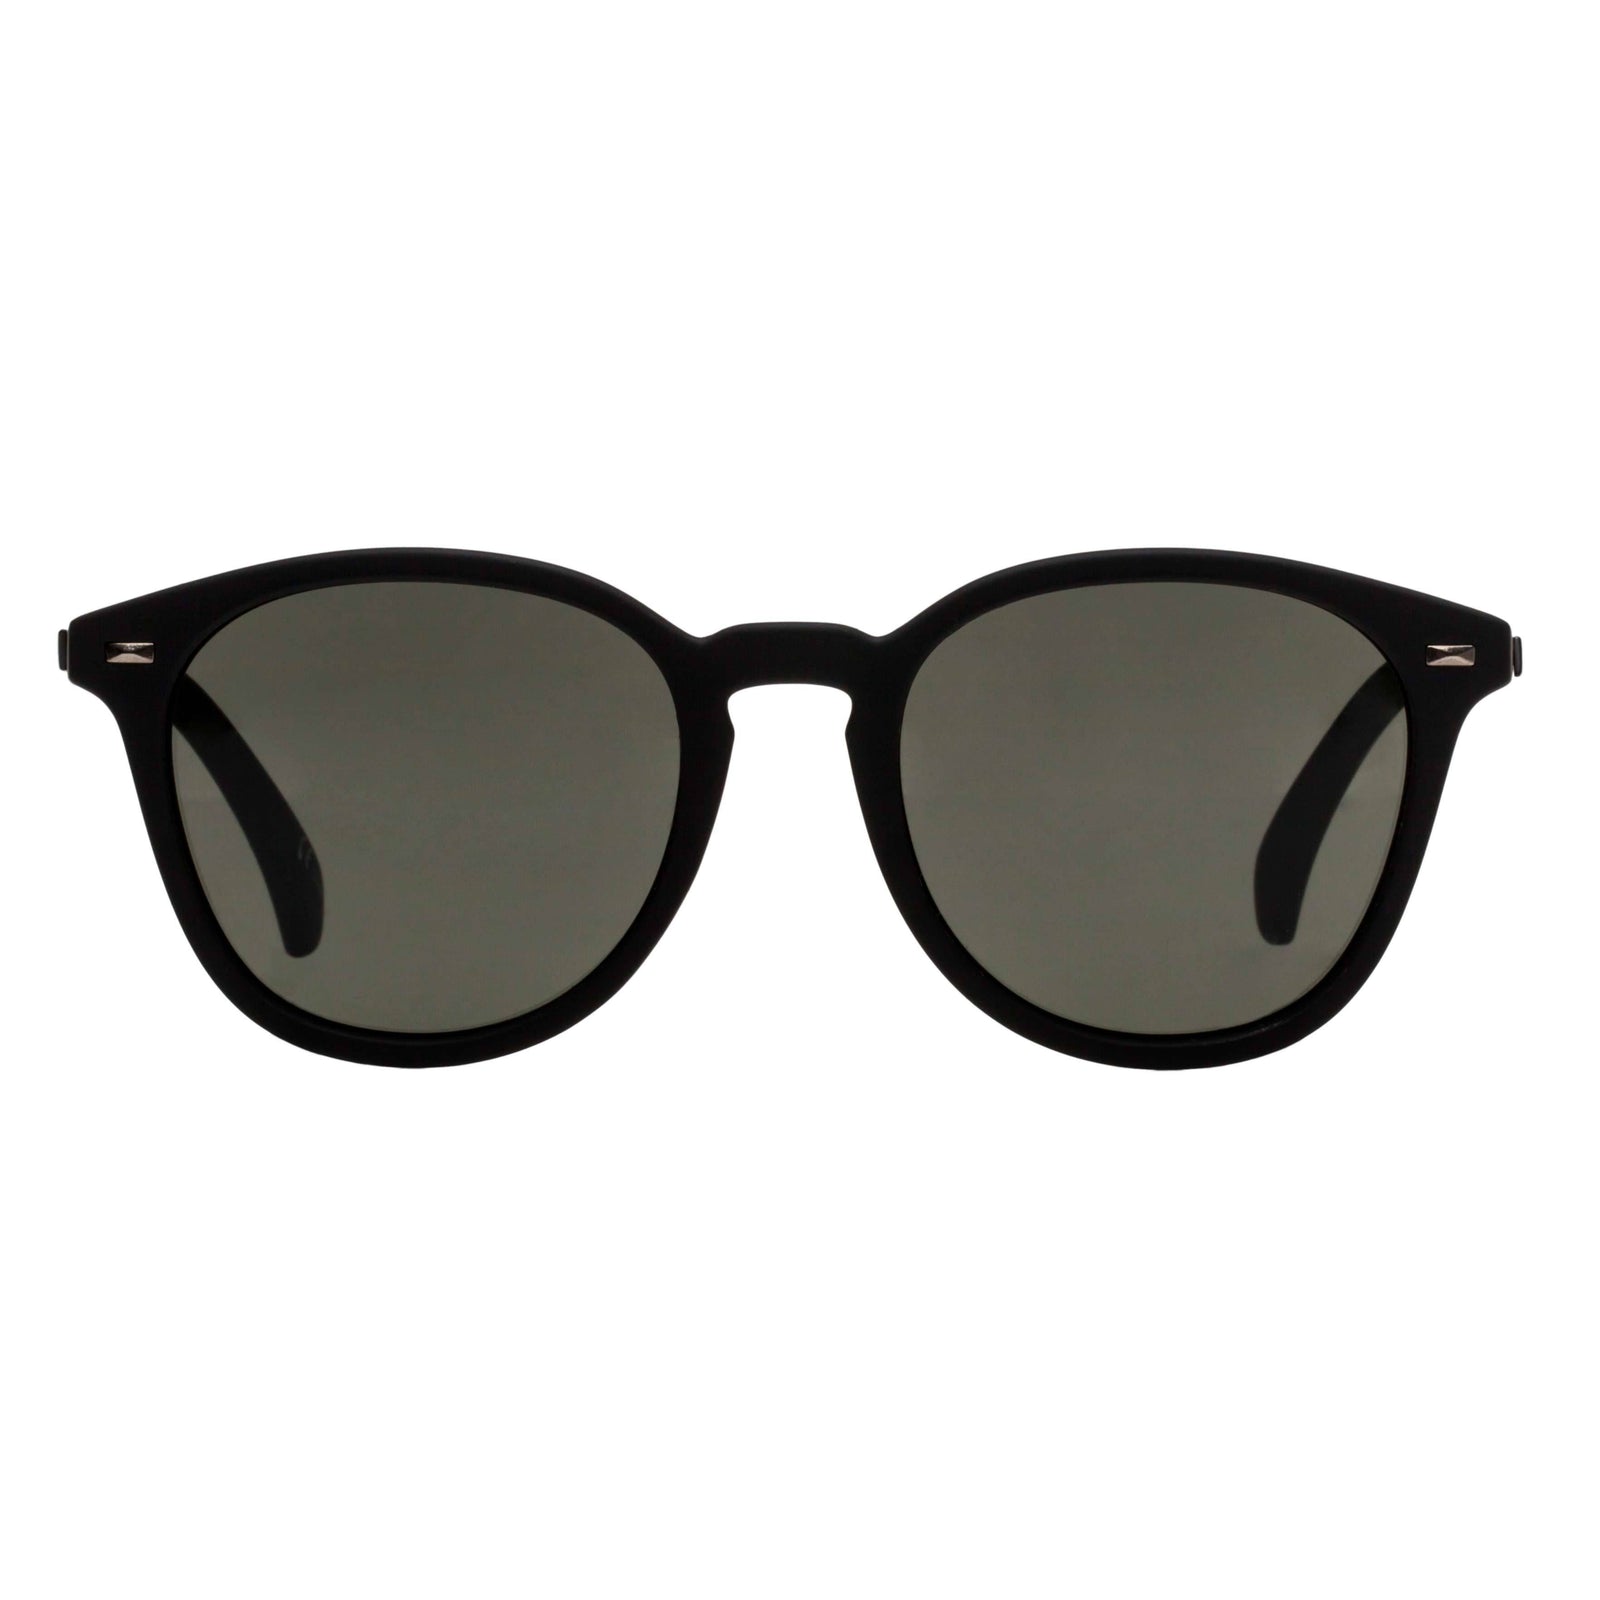 Bandwagon Black | Tort Round Uni-Sex Le Specs Sunglasses